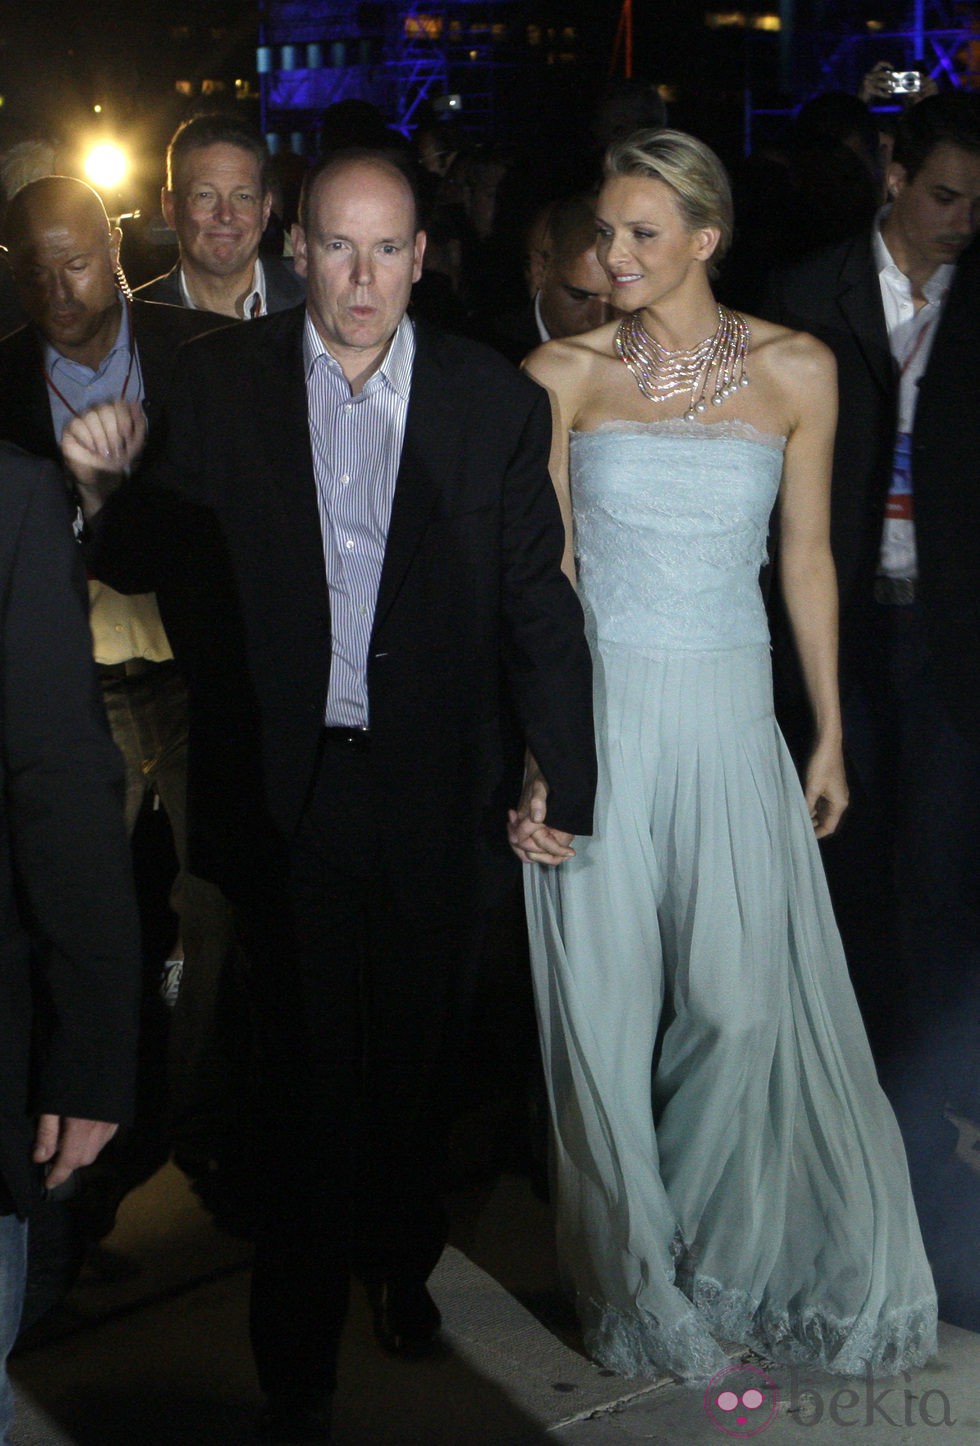 Charlene de Mónaco con pantalón palazzo de Chanel en su boda civil